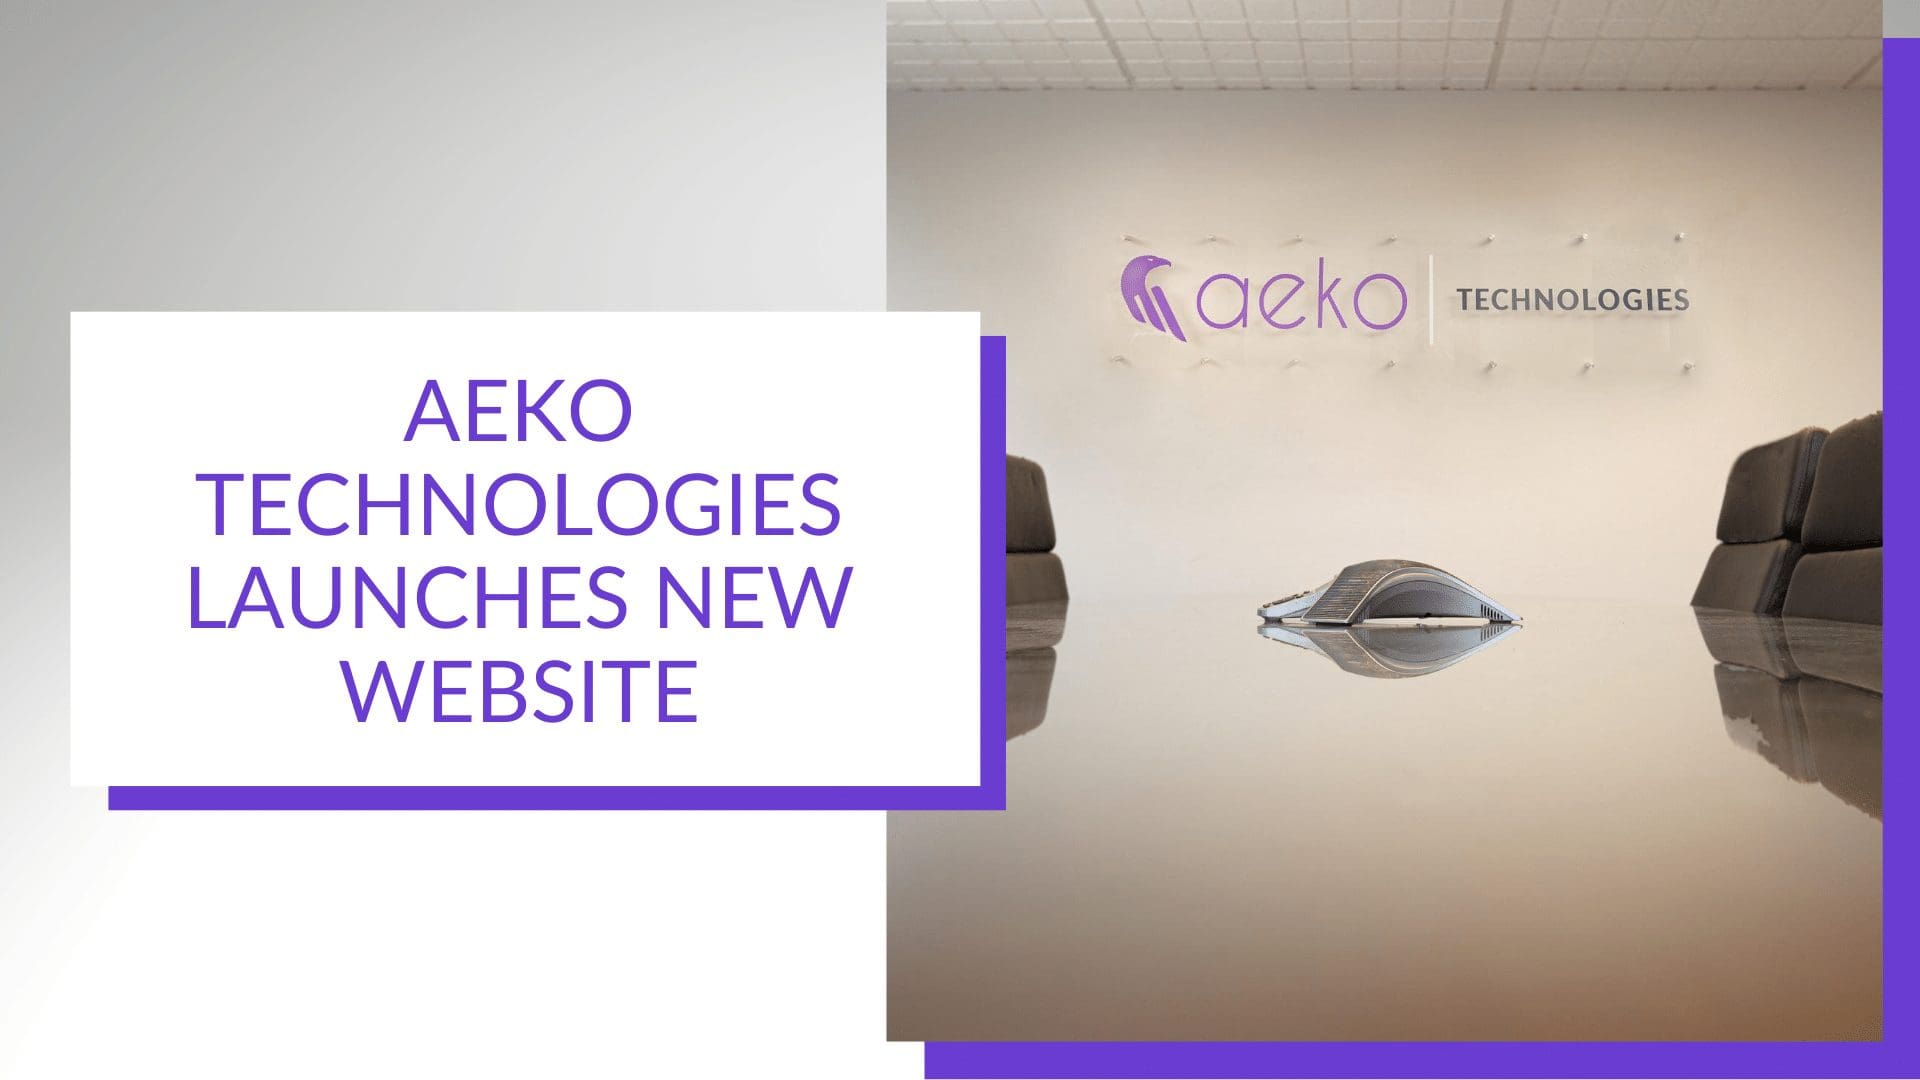 Aeko Technologies website image